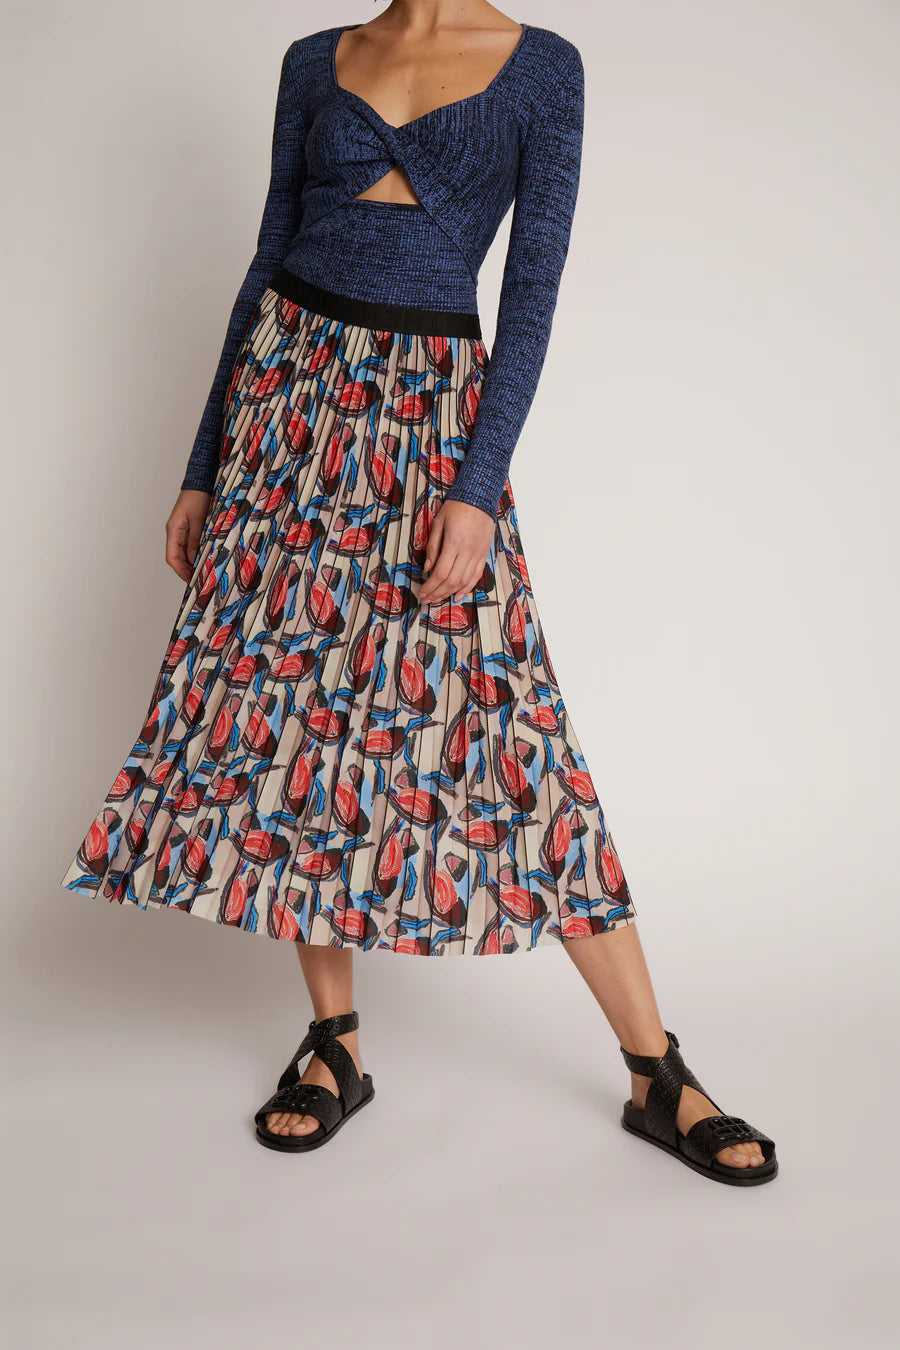 Munthe Charming skirt